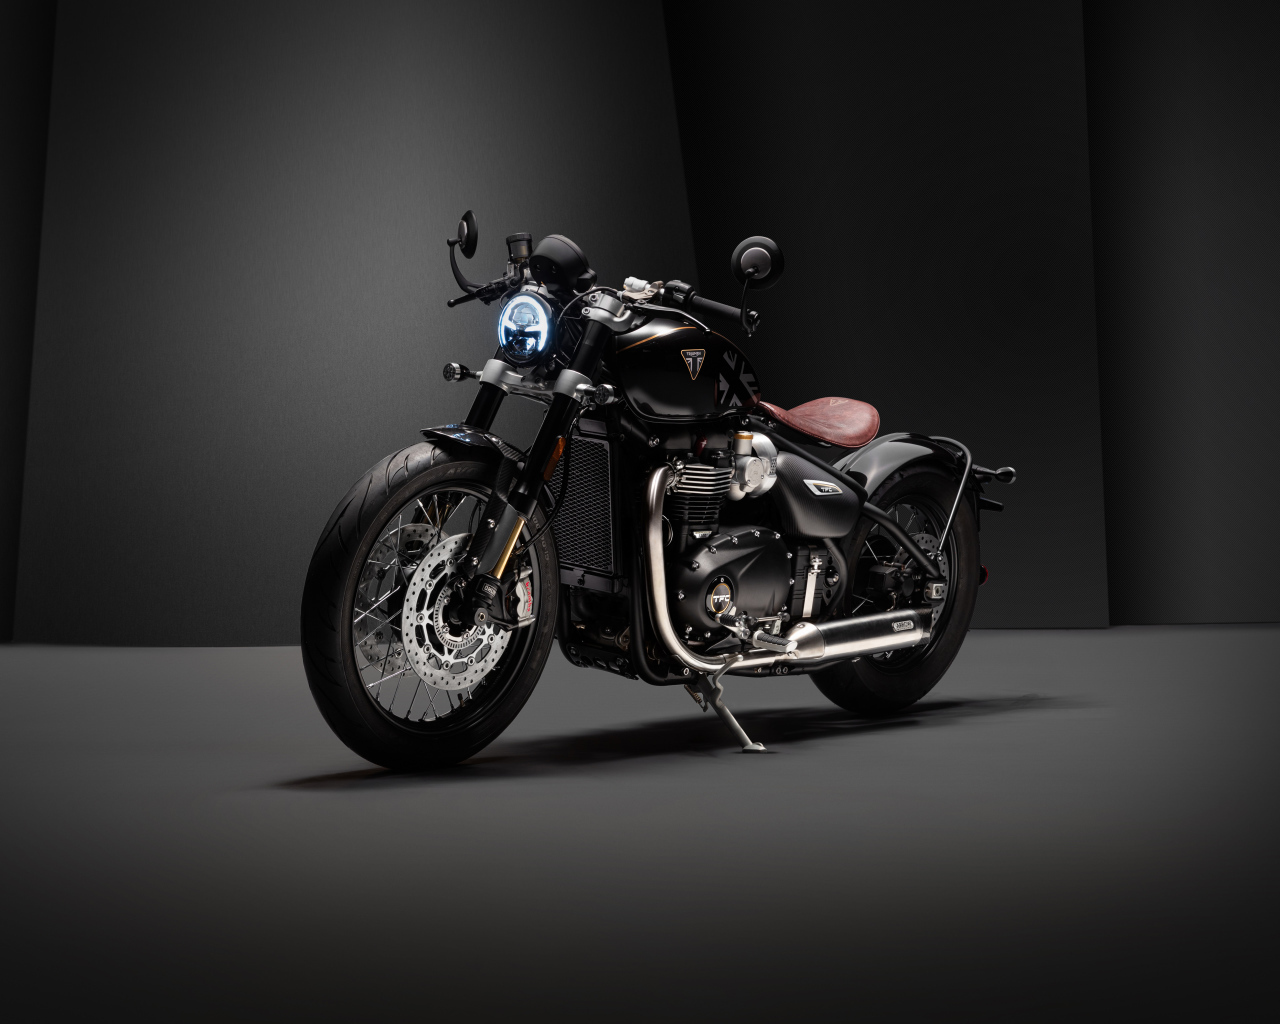 Мотоцикл Triumph Bonneville Bobber TFC 2020 года на сером фоне